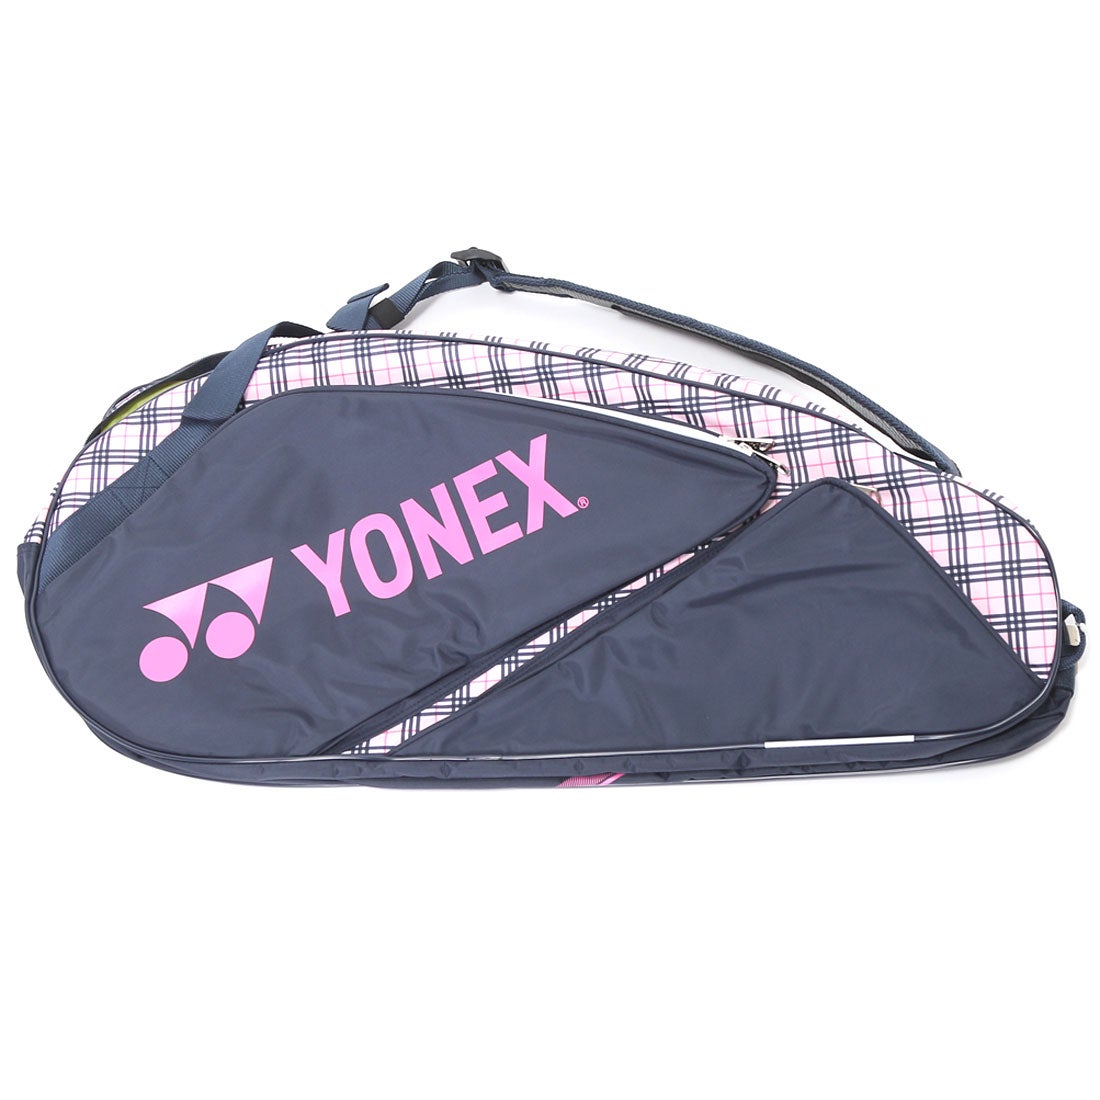 YONEX 繝ｨ繝阪ャ繧ｯ繧ｹ  繧ｭ繝｣繧ｹ繧ｿ繝ｼ繝舌ャ繧ｰ 繝�繝九せ 繝ｩ繧ｱ繝�繝医ヰ繝�繧ｰ - 9